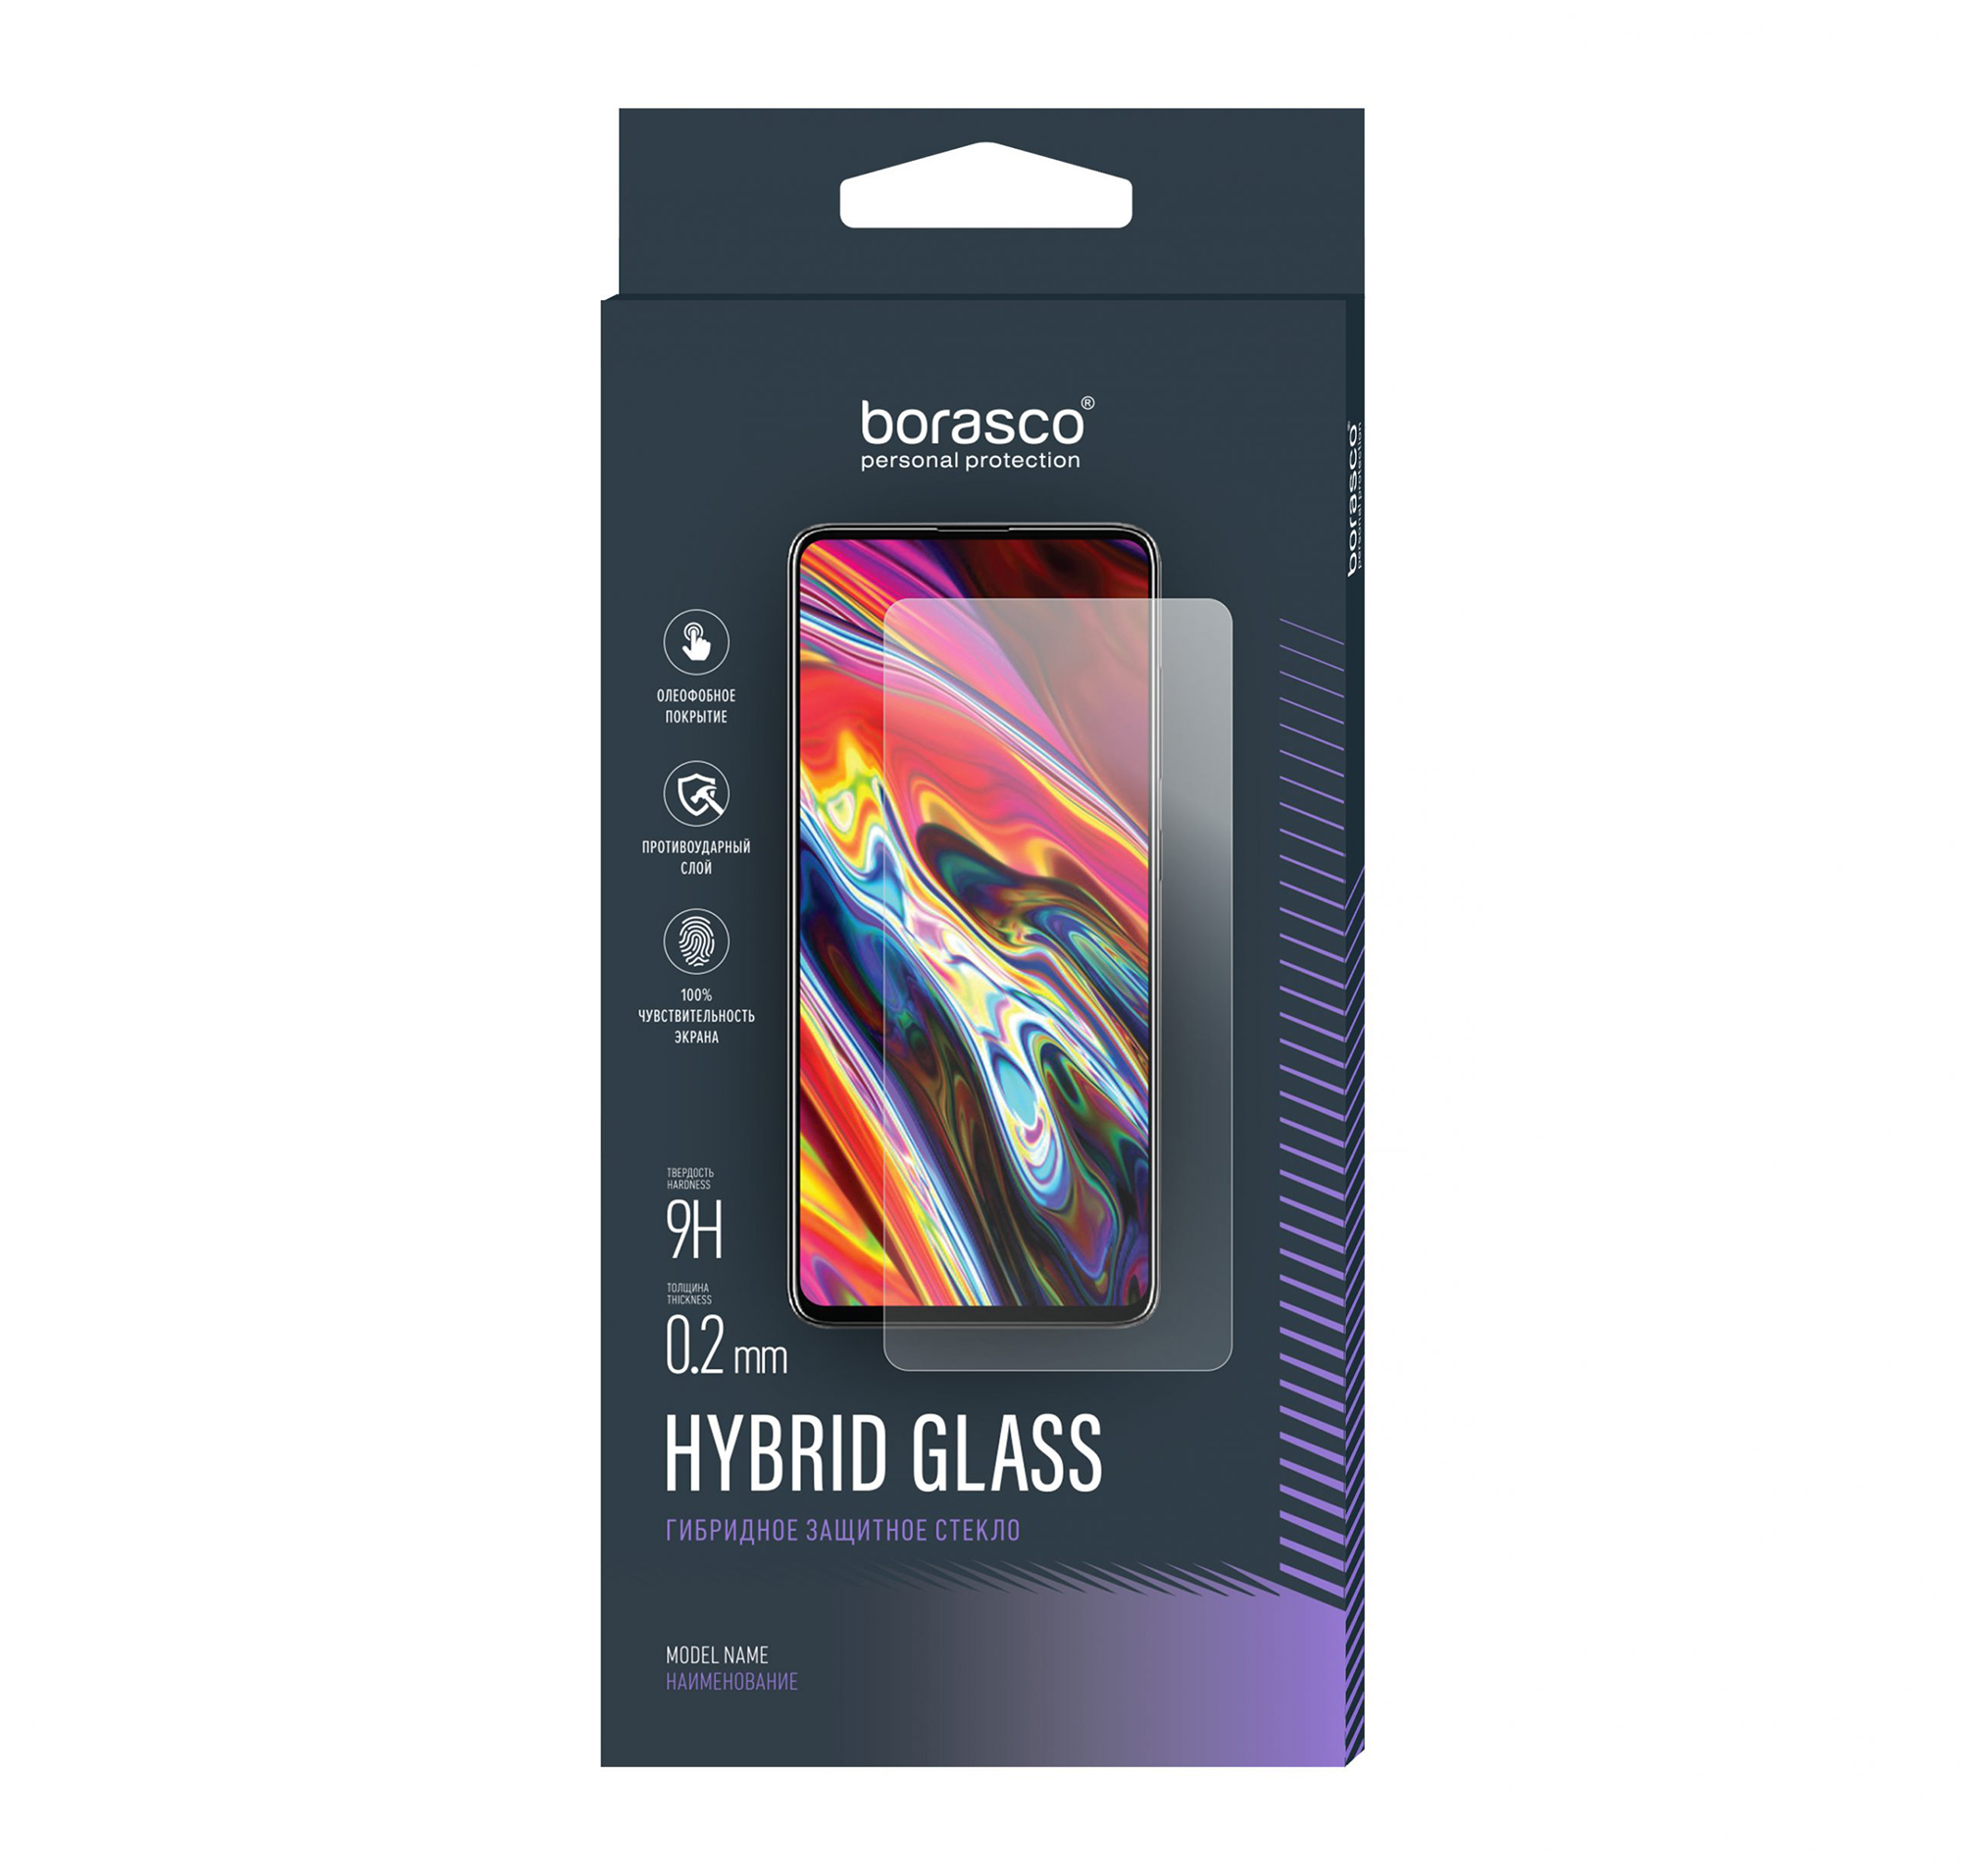 Защитное стекло Hybrid Glass для Apple iPad Air (2020) защитное стекло redline для apple ipad air air2 pro 9 7 2018 1шт ут000005067